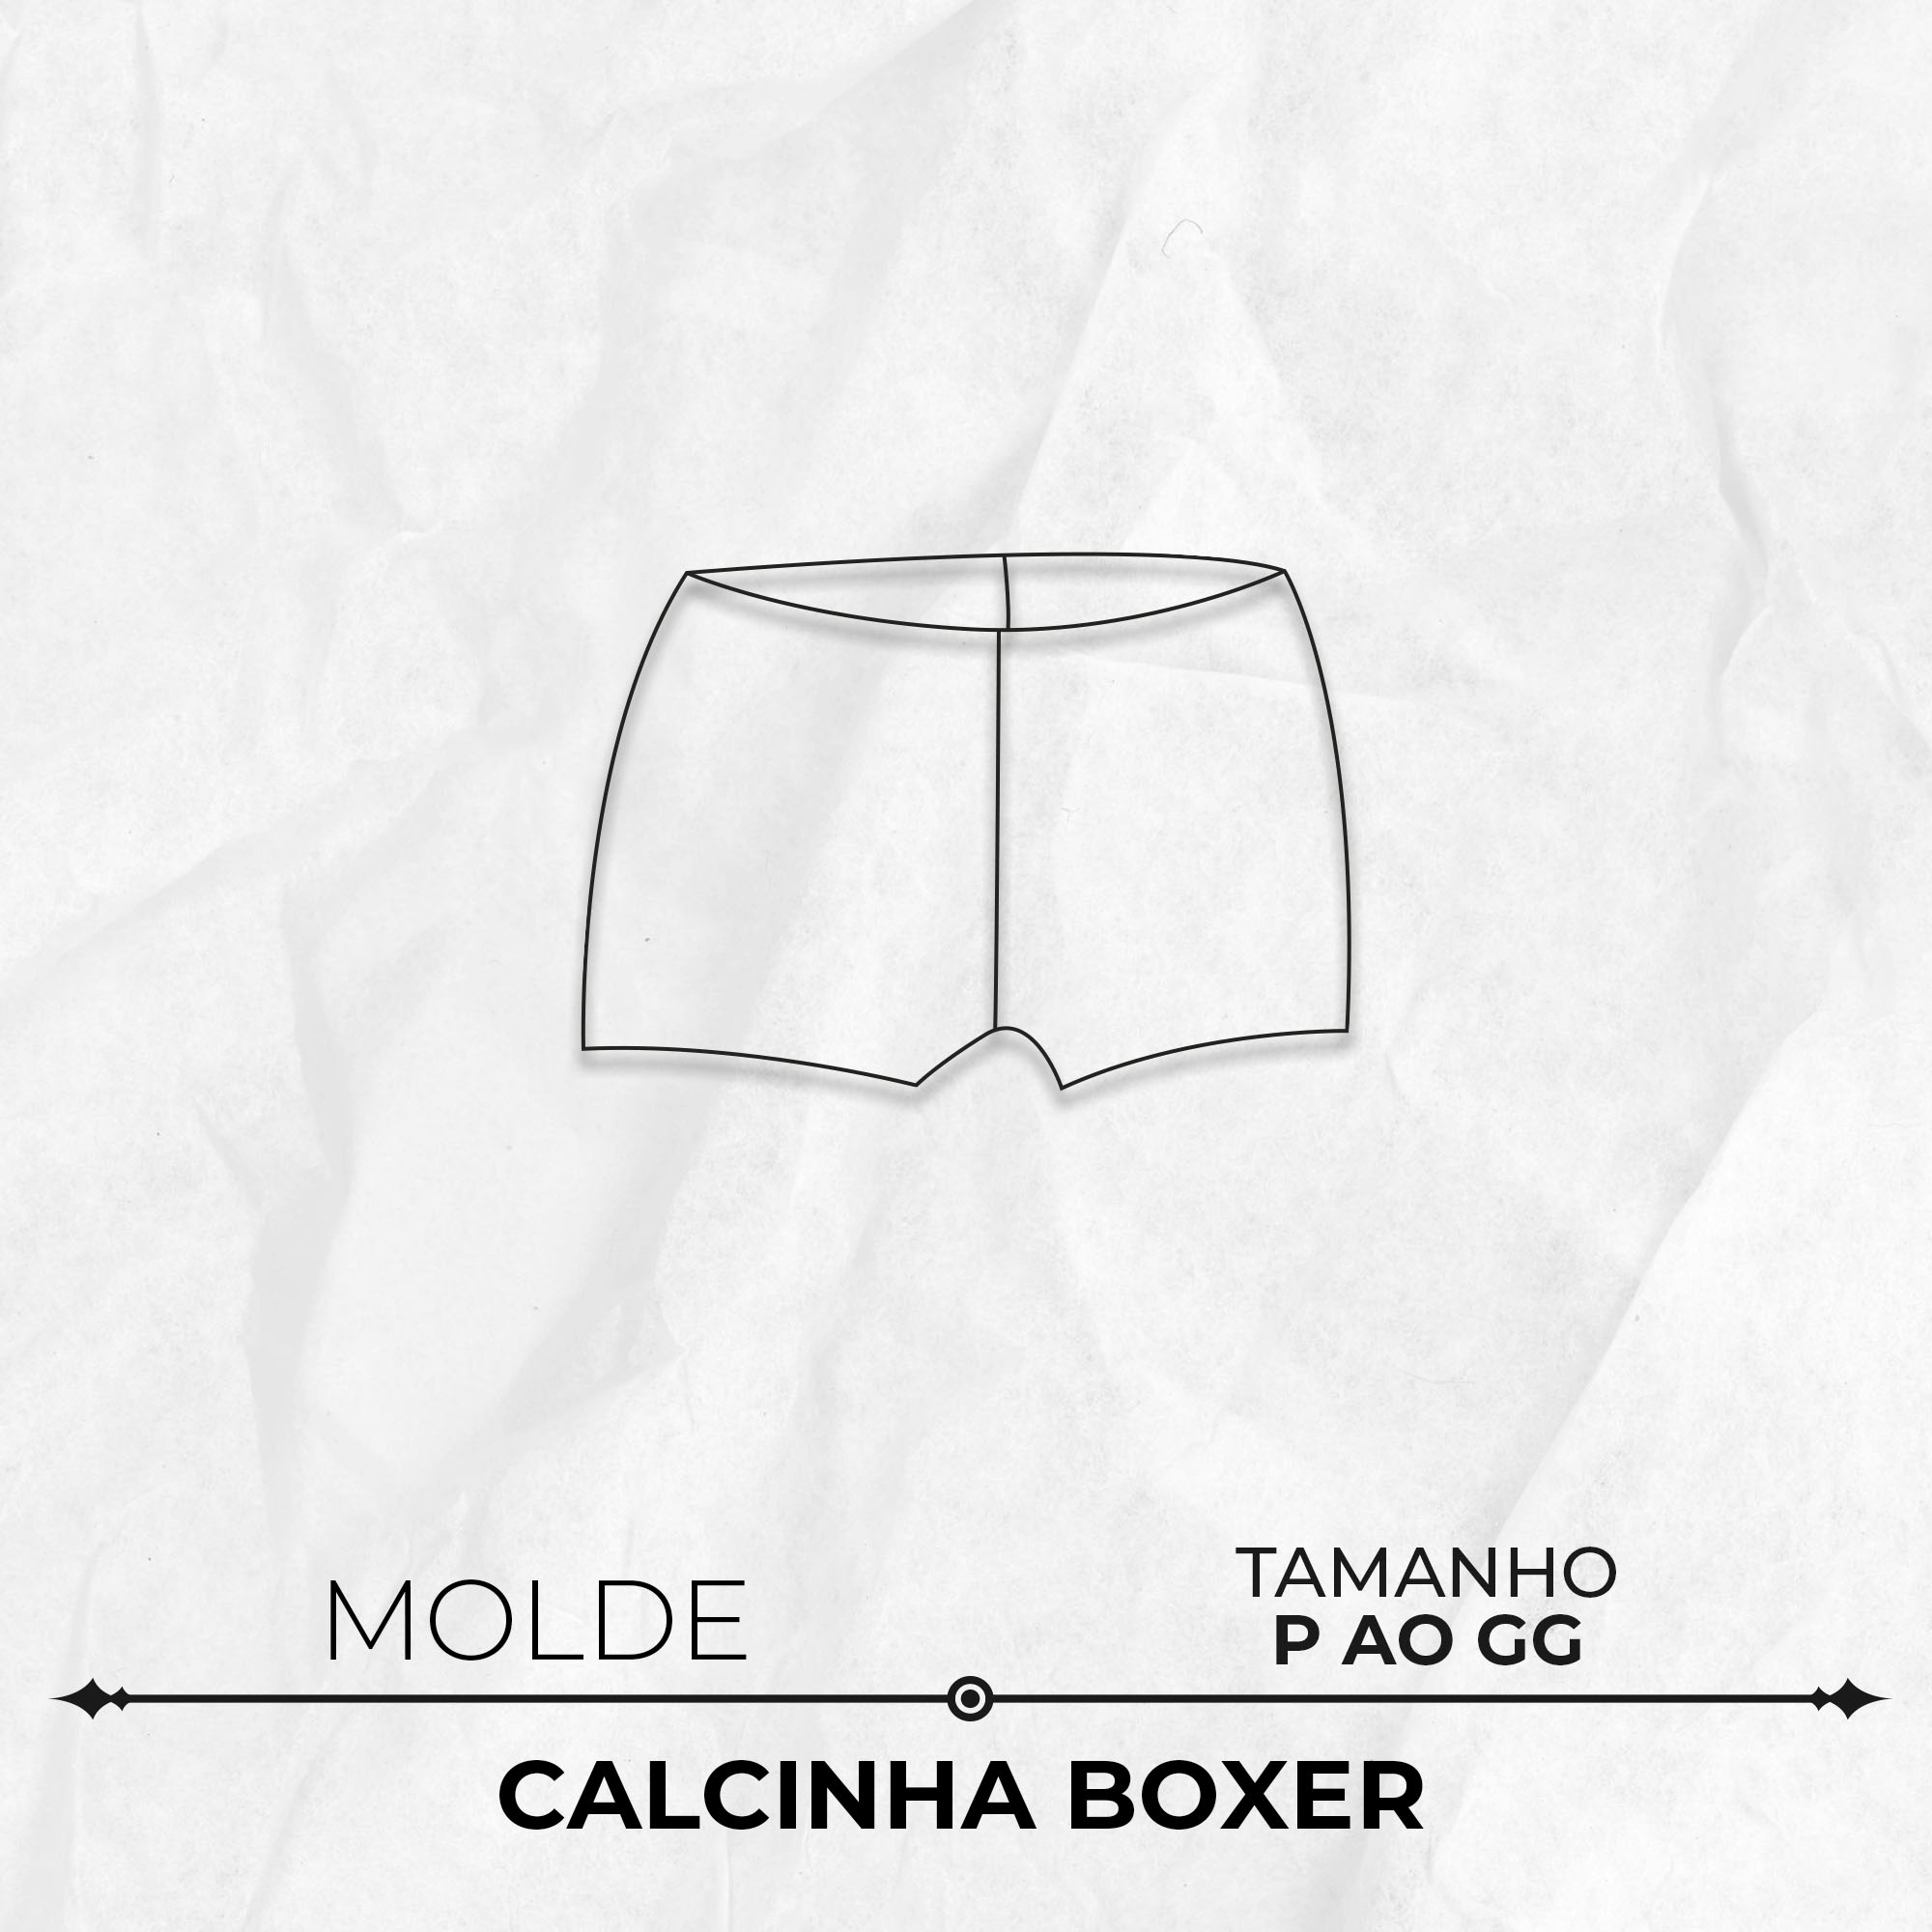 Molde lingerie calcinha boxer by Marlene Mukai